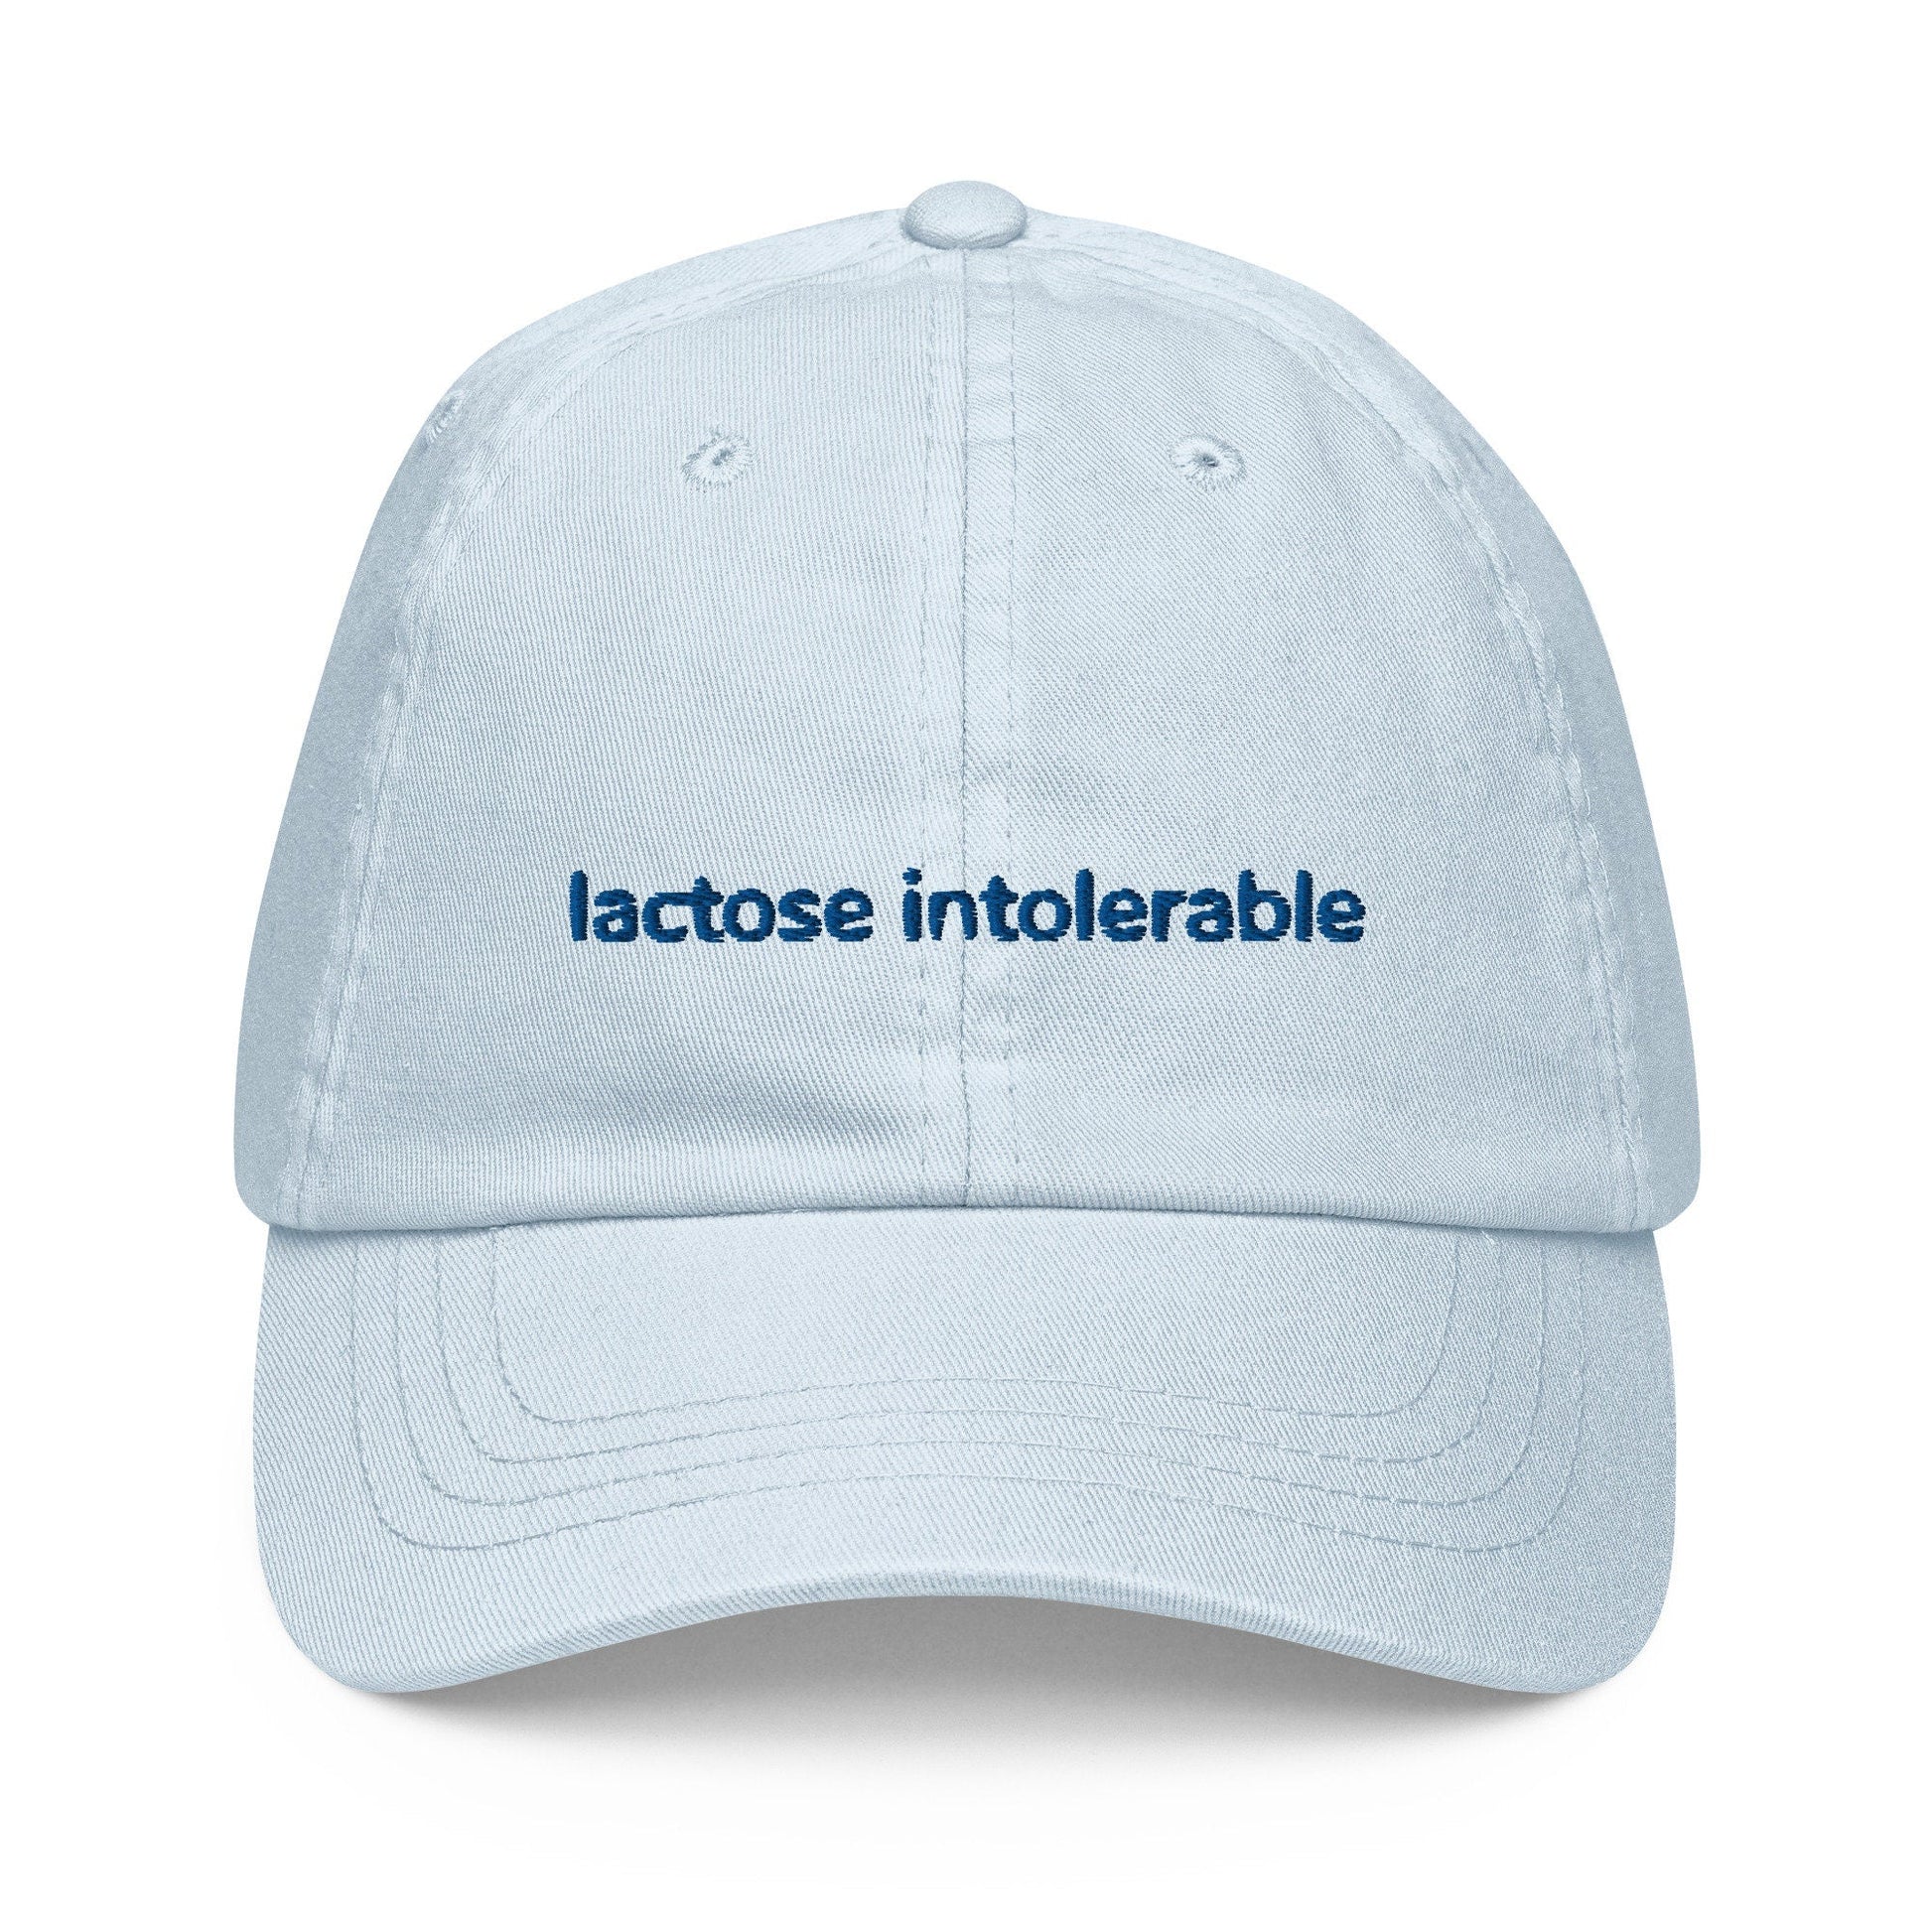 Lactose Intolerable Pastel Dad Hat - Joke Gift for vegans, lactose intolerant friends - Dairy Free Embroidered Cotton Cap - Evilwater Originals